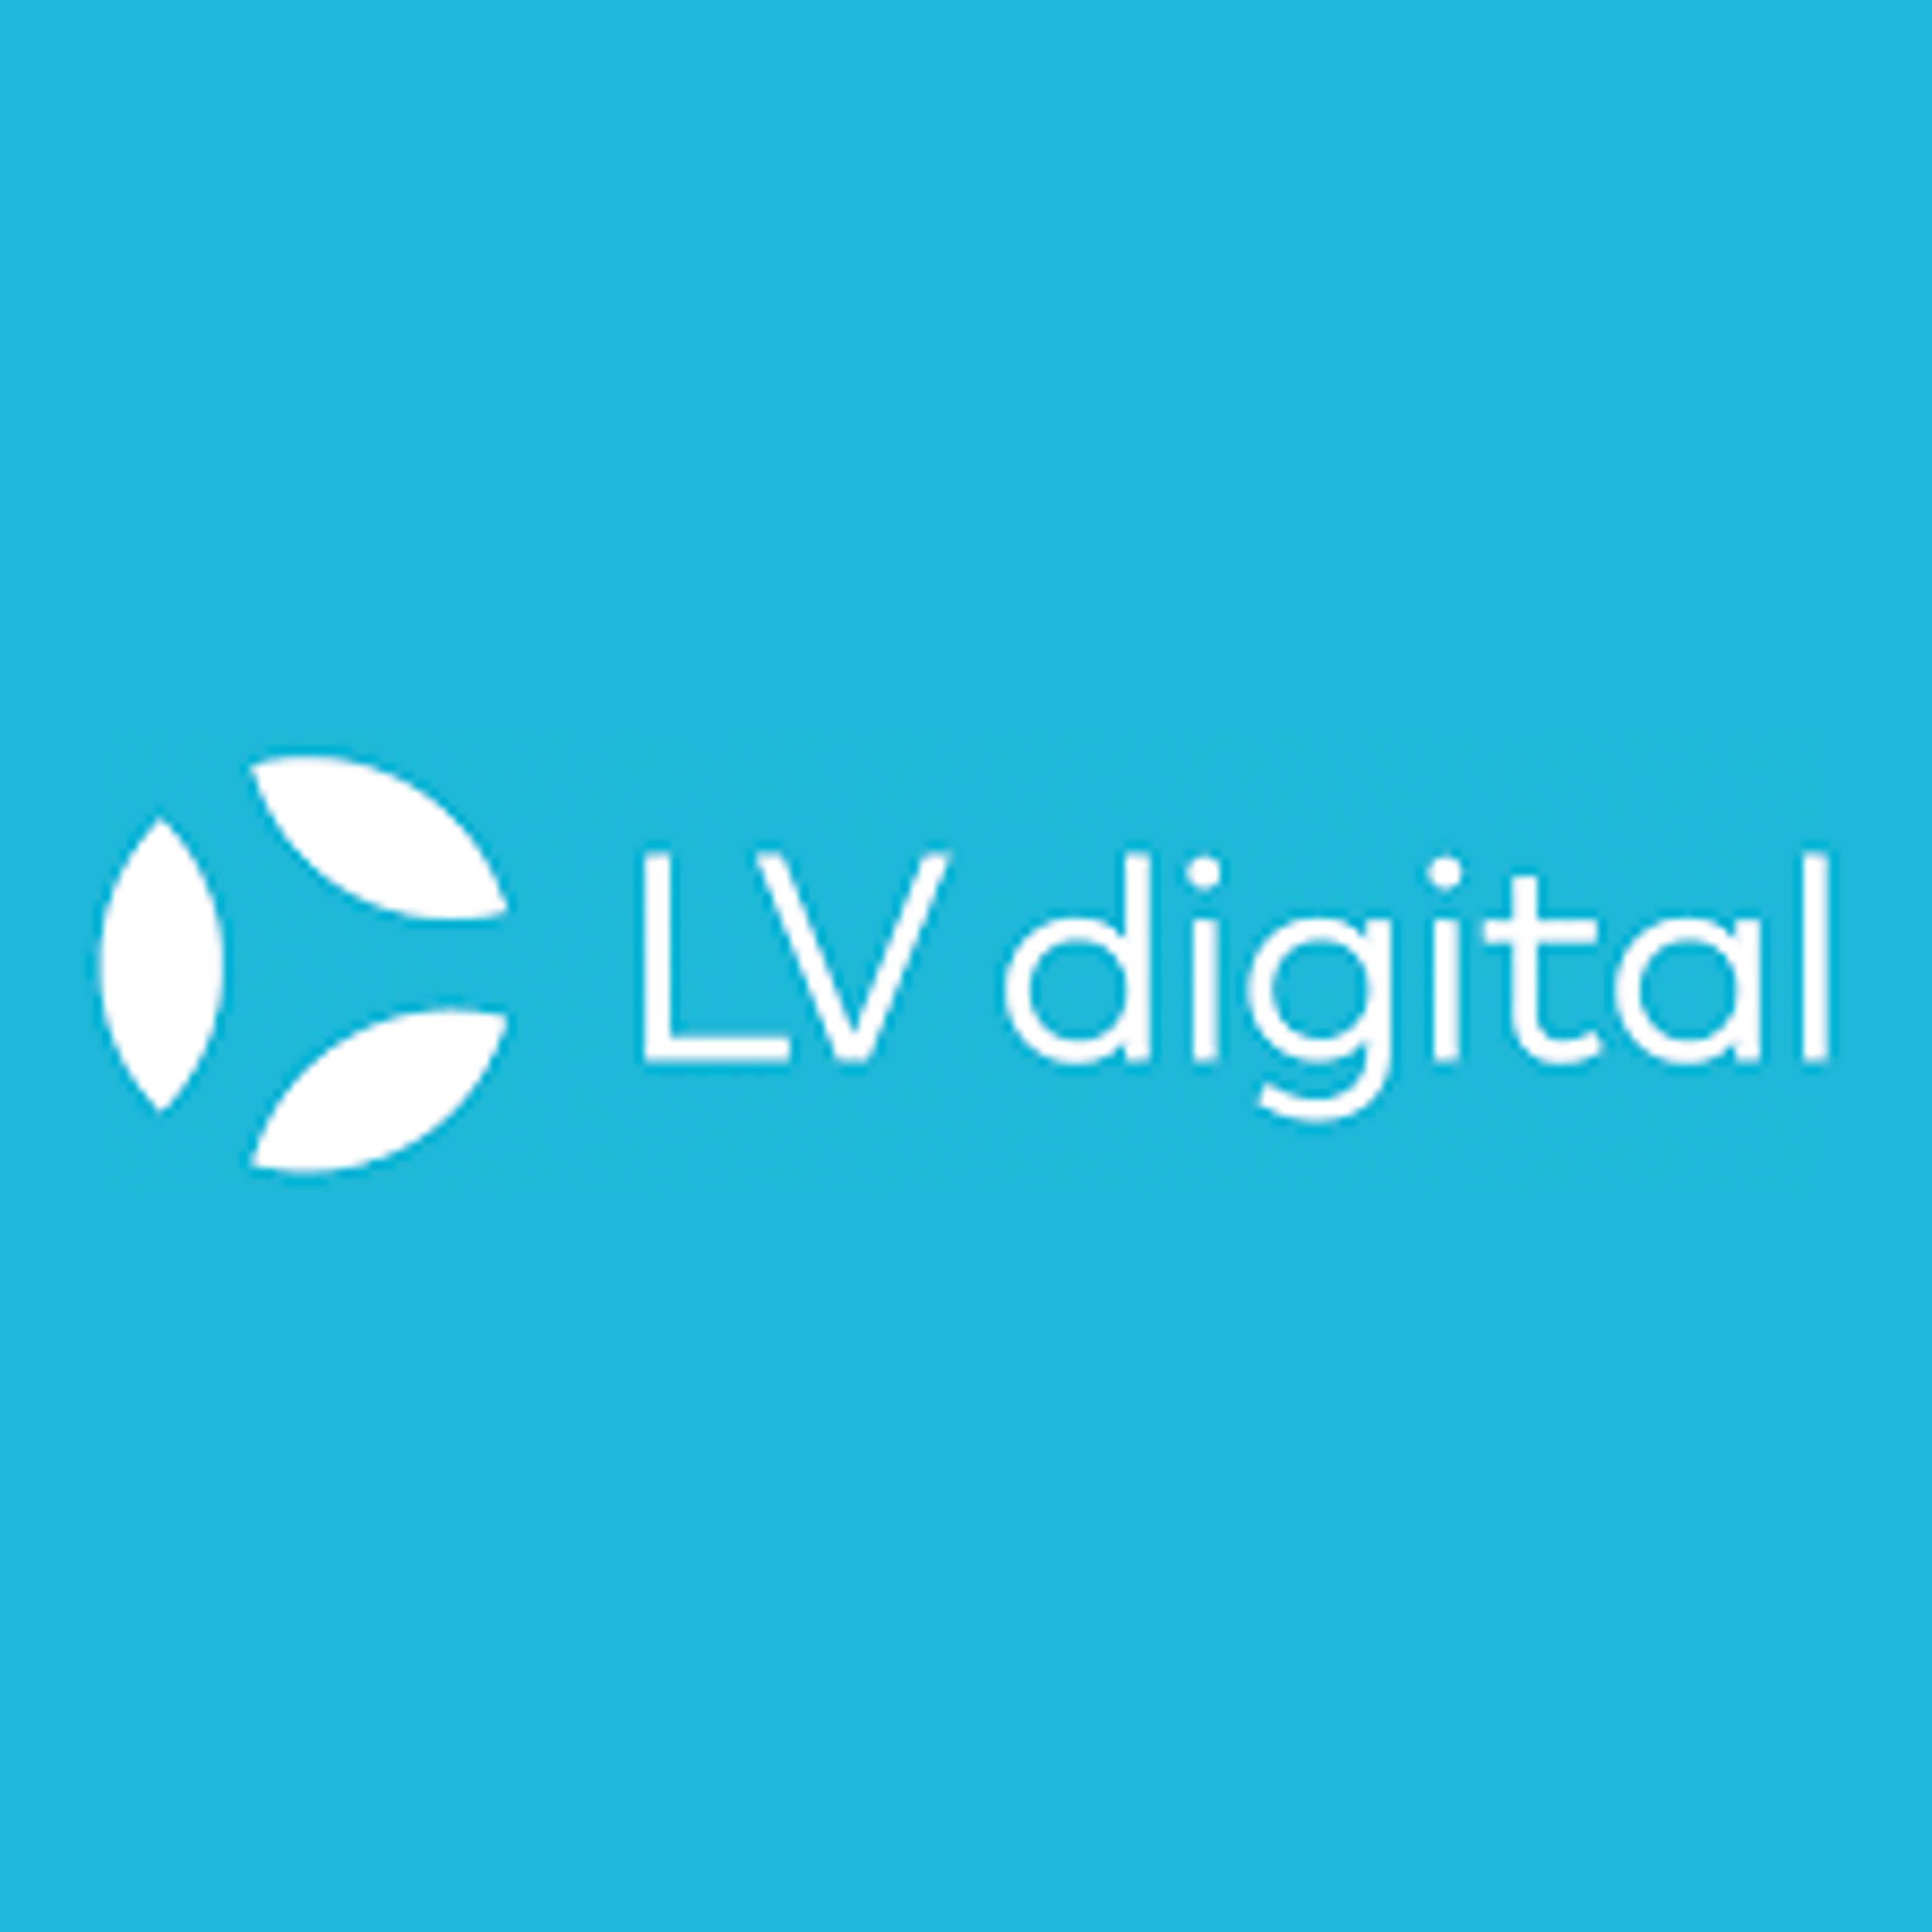 LV digital Logo